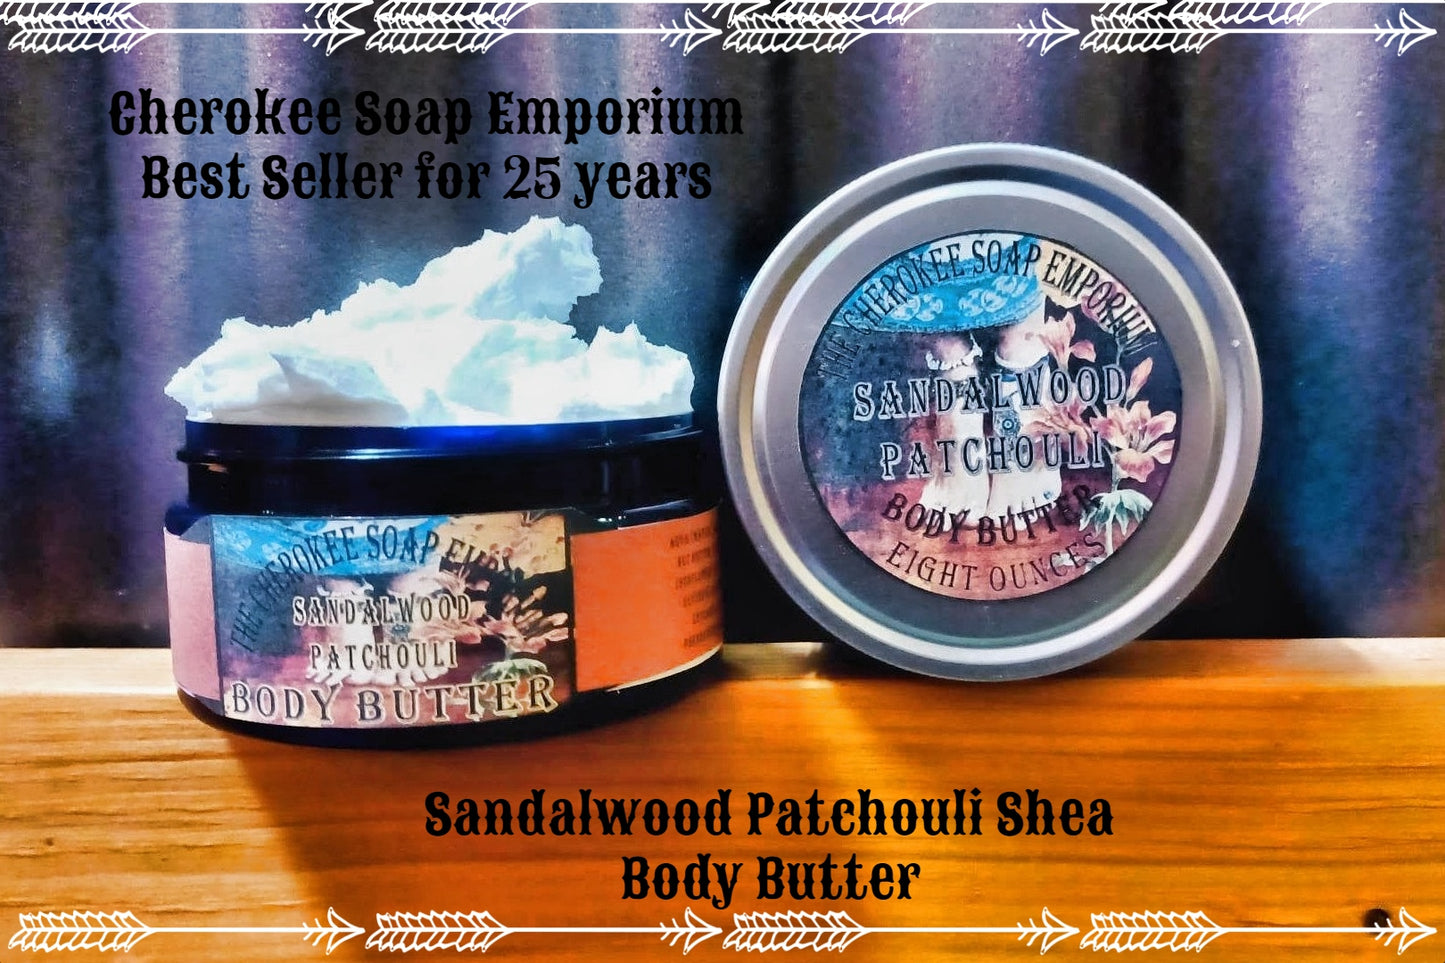 Sandalwood Patchouli Shea Body Butter